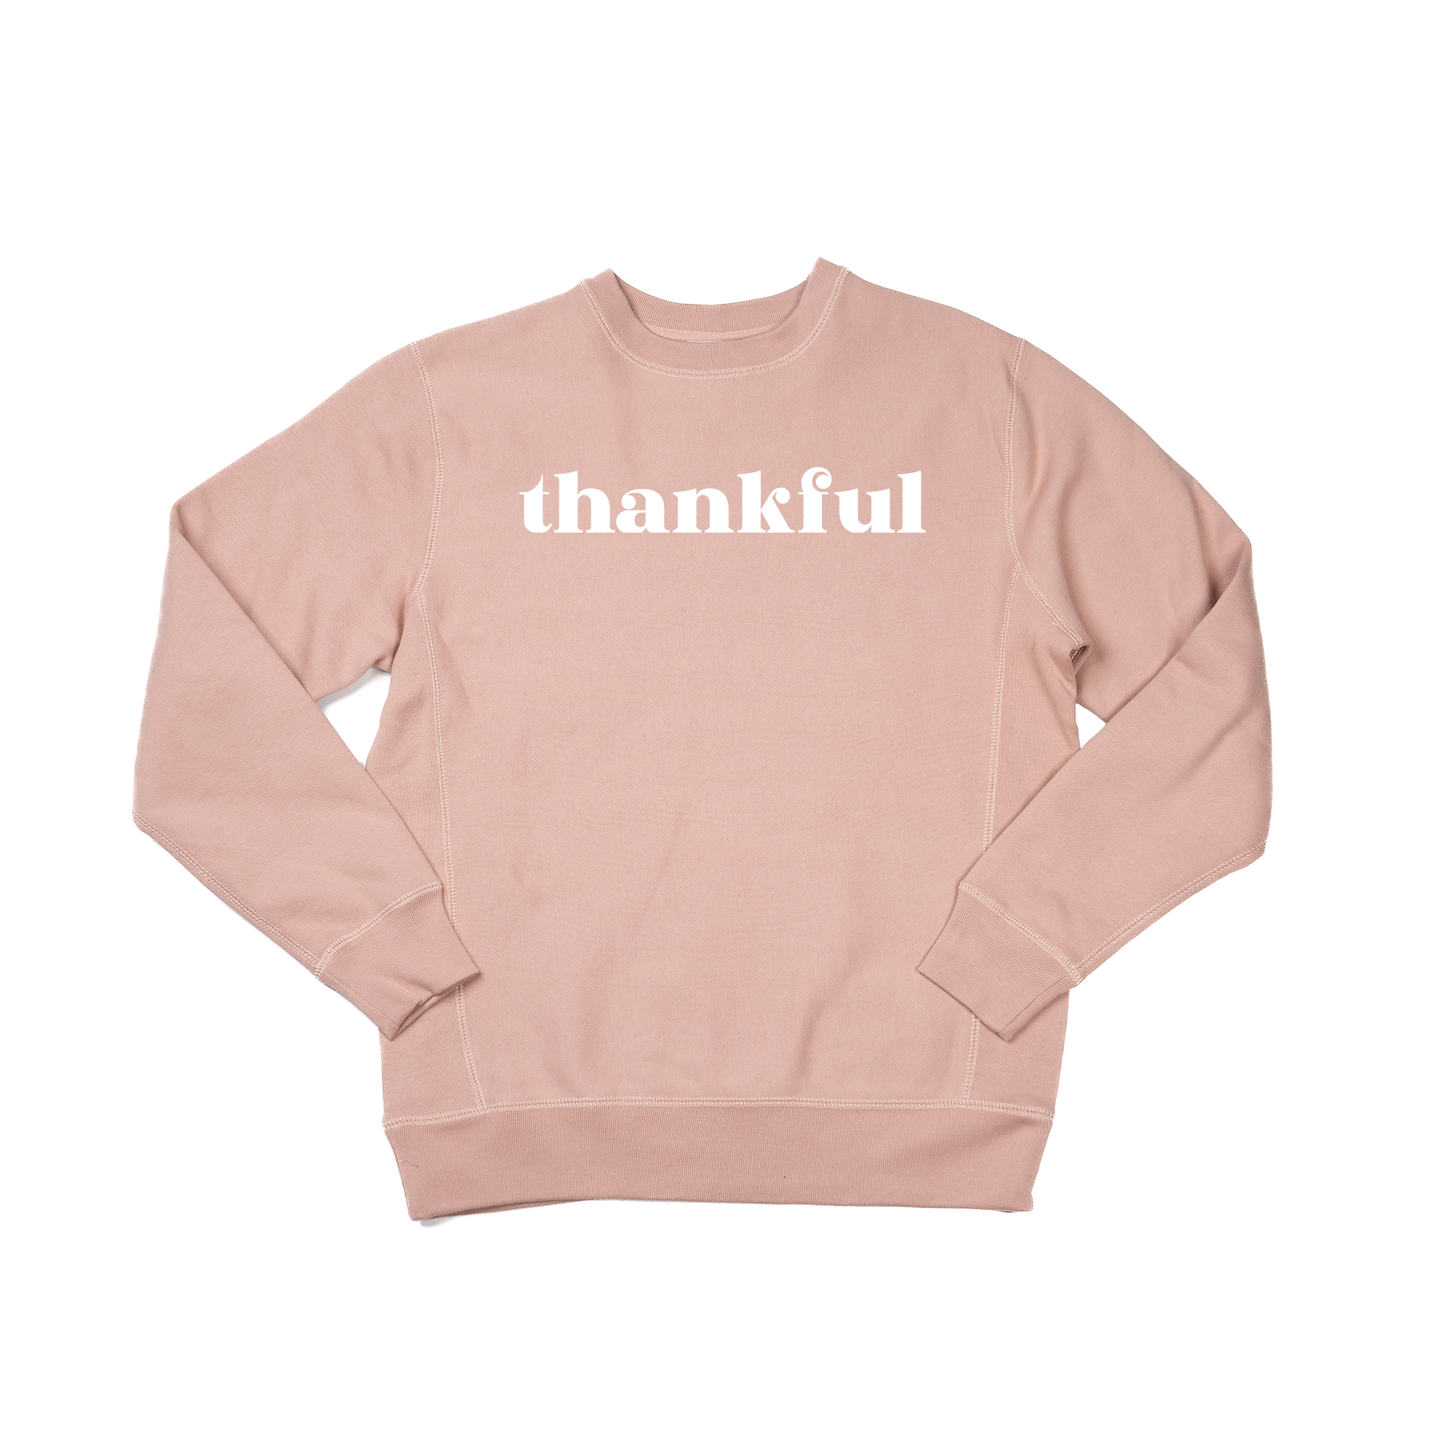 Thankful (White) - Heavyweight Sweatshirt (Dusty Rose)